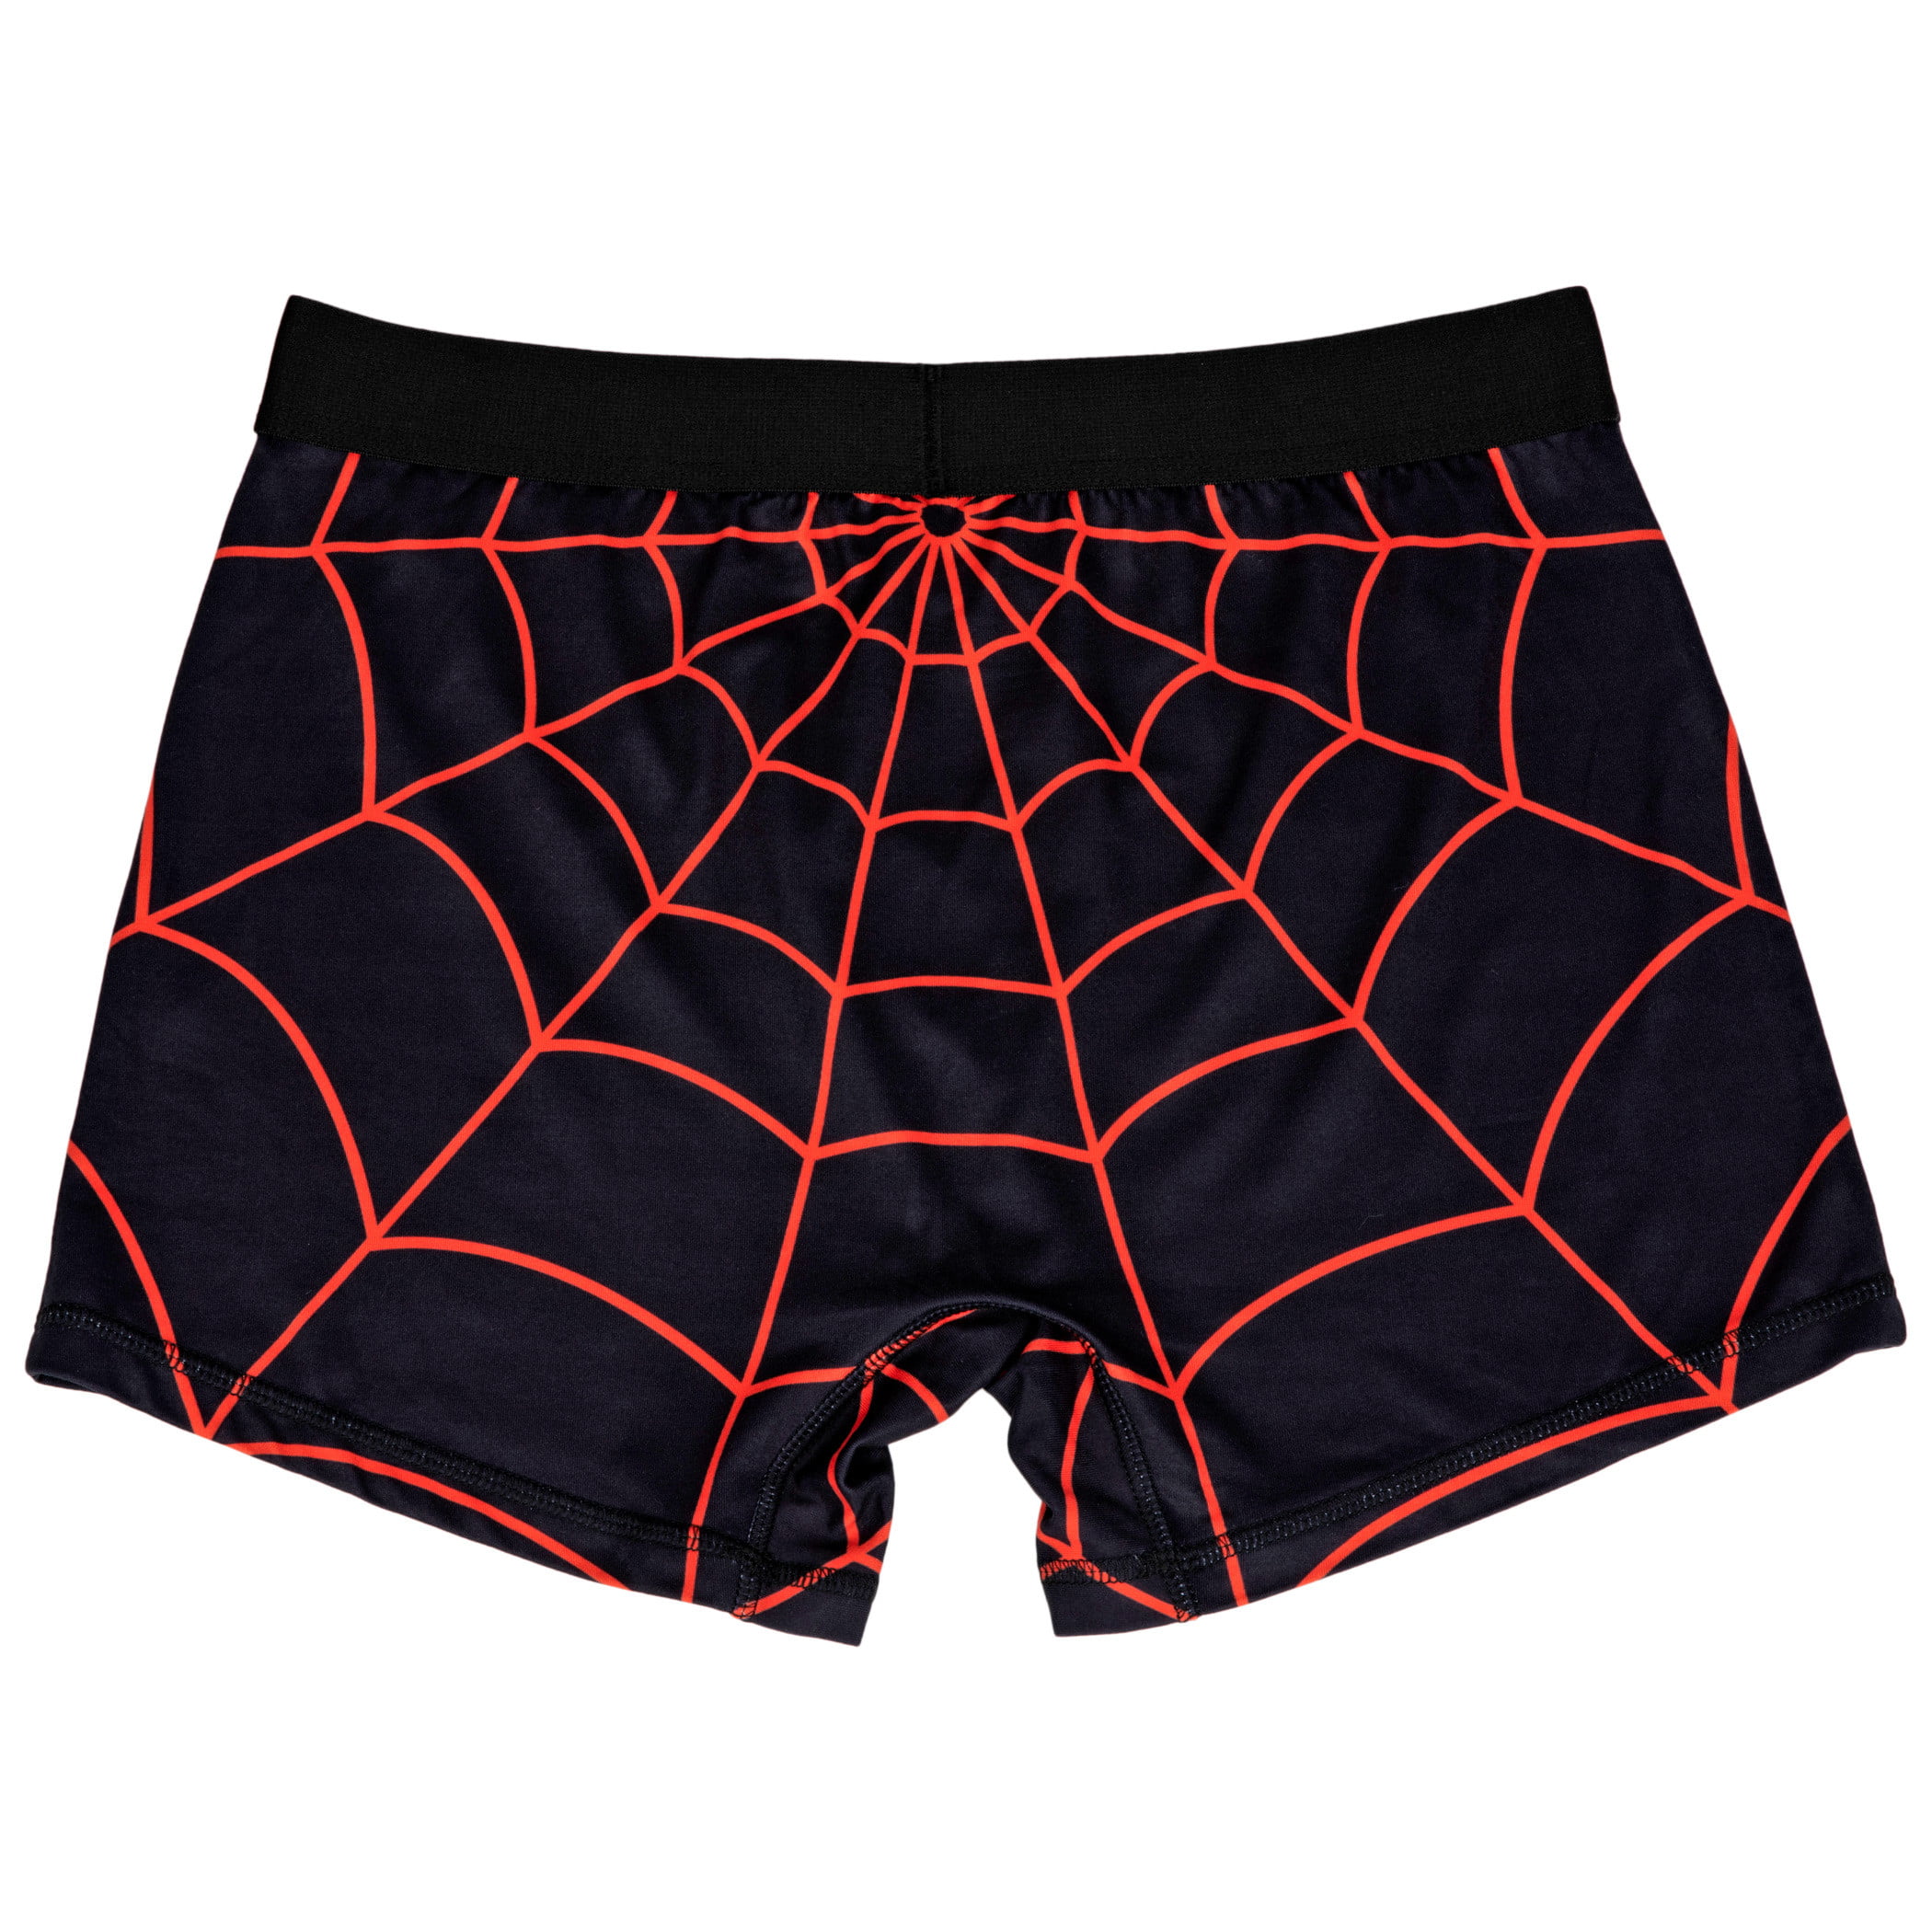 Spiderman Panties -  Canada